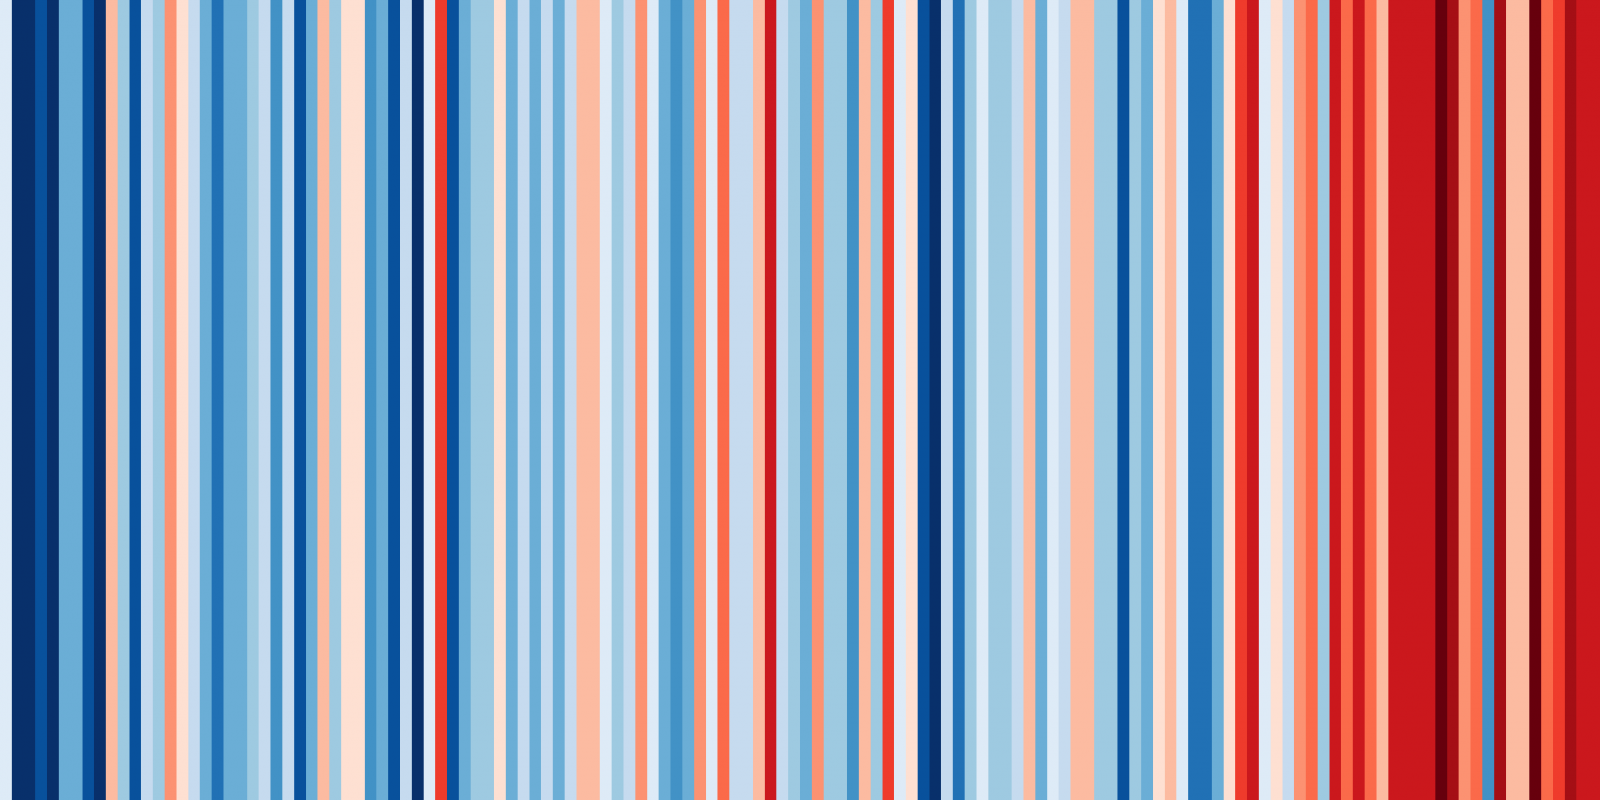 Warming stripes ShowyourStripes